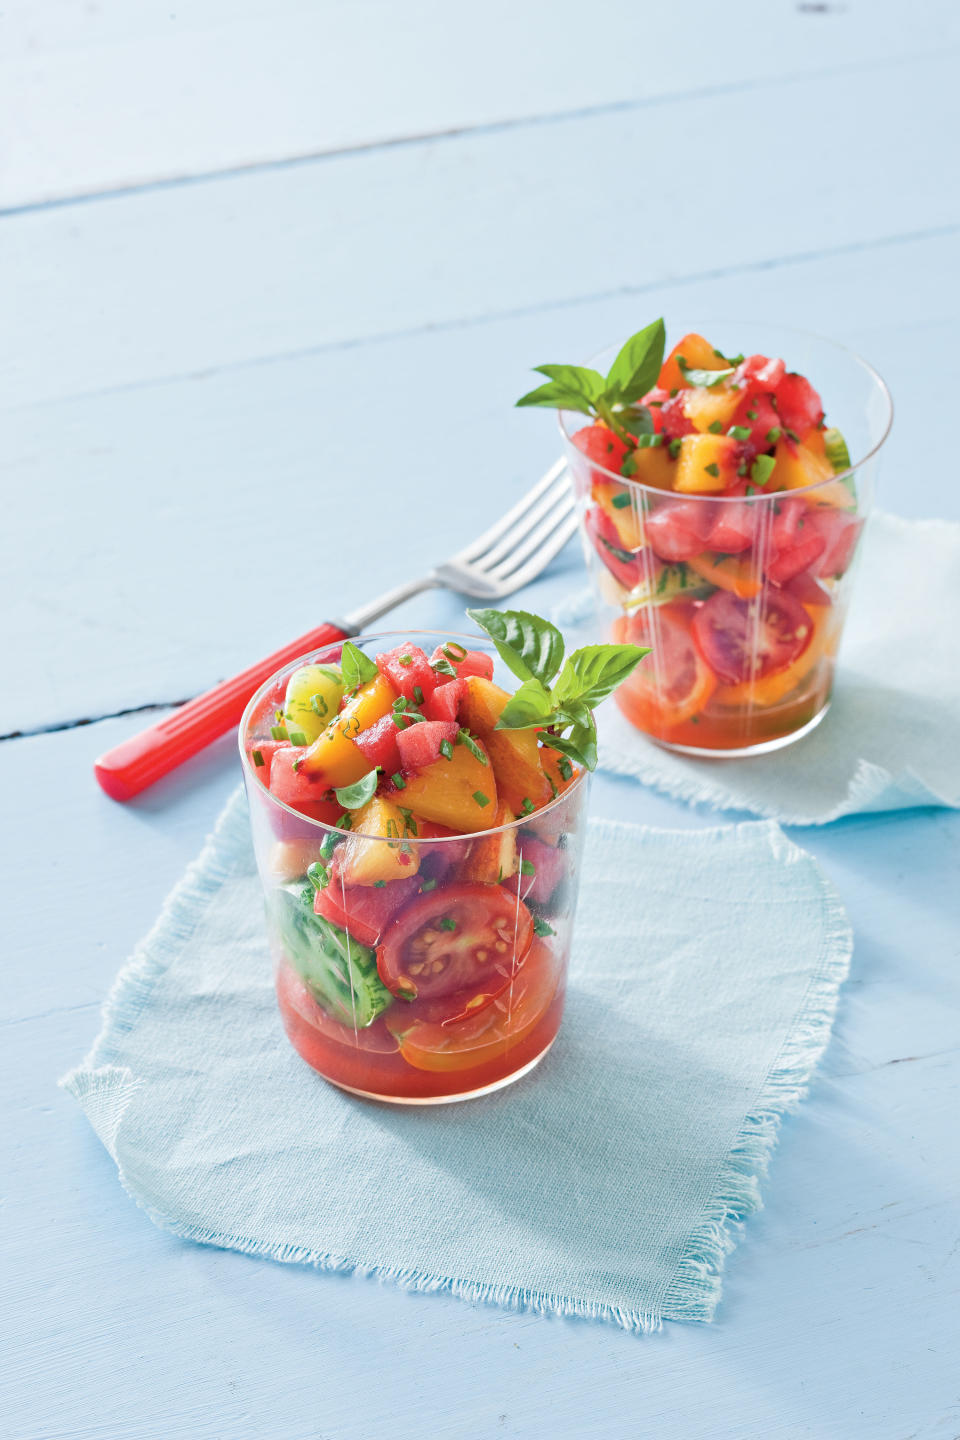 Watermelon-Peach Salsa and Tomatoes